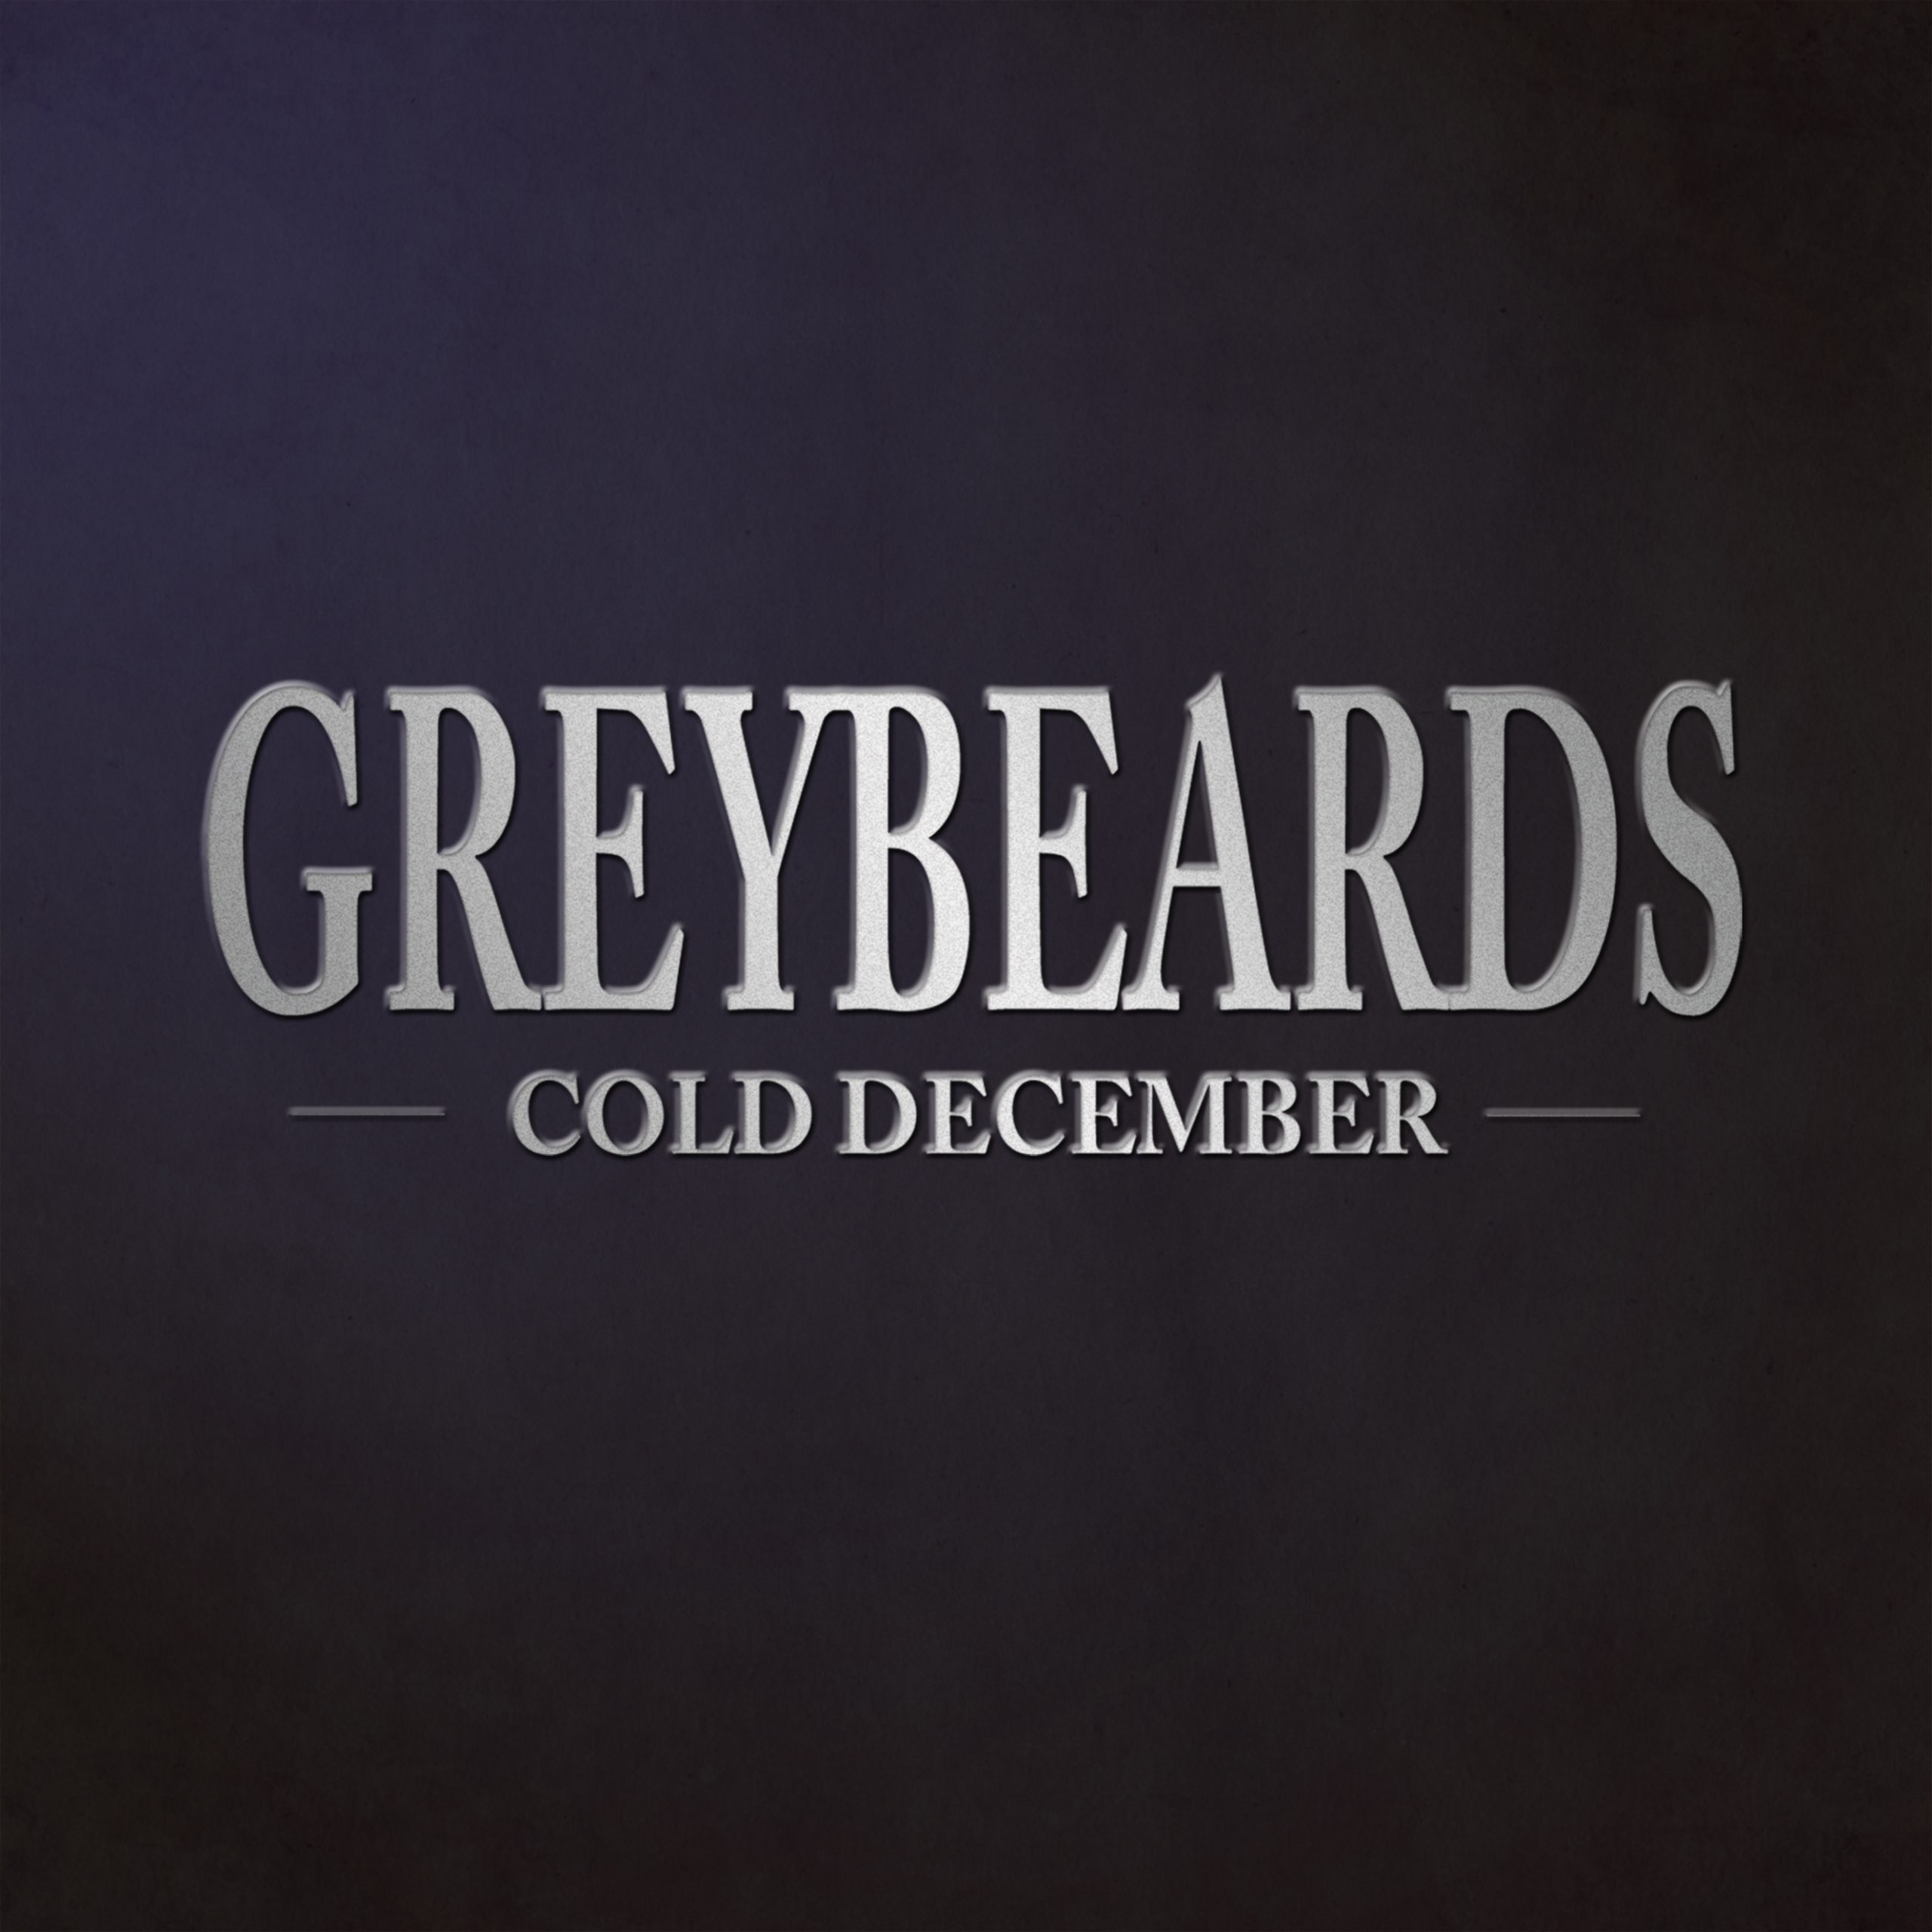 Greybeards.